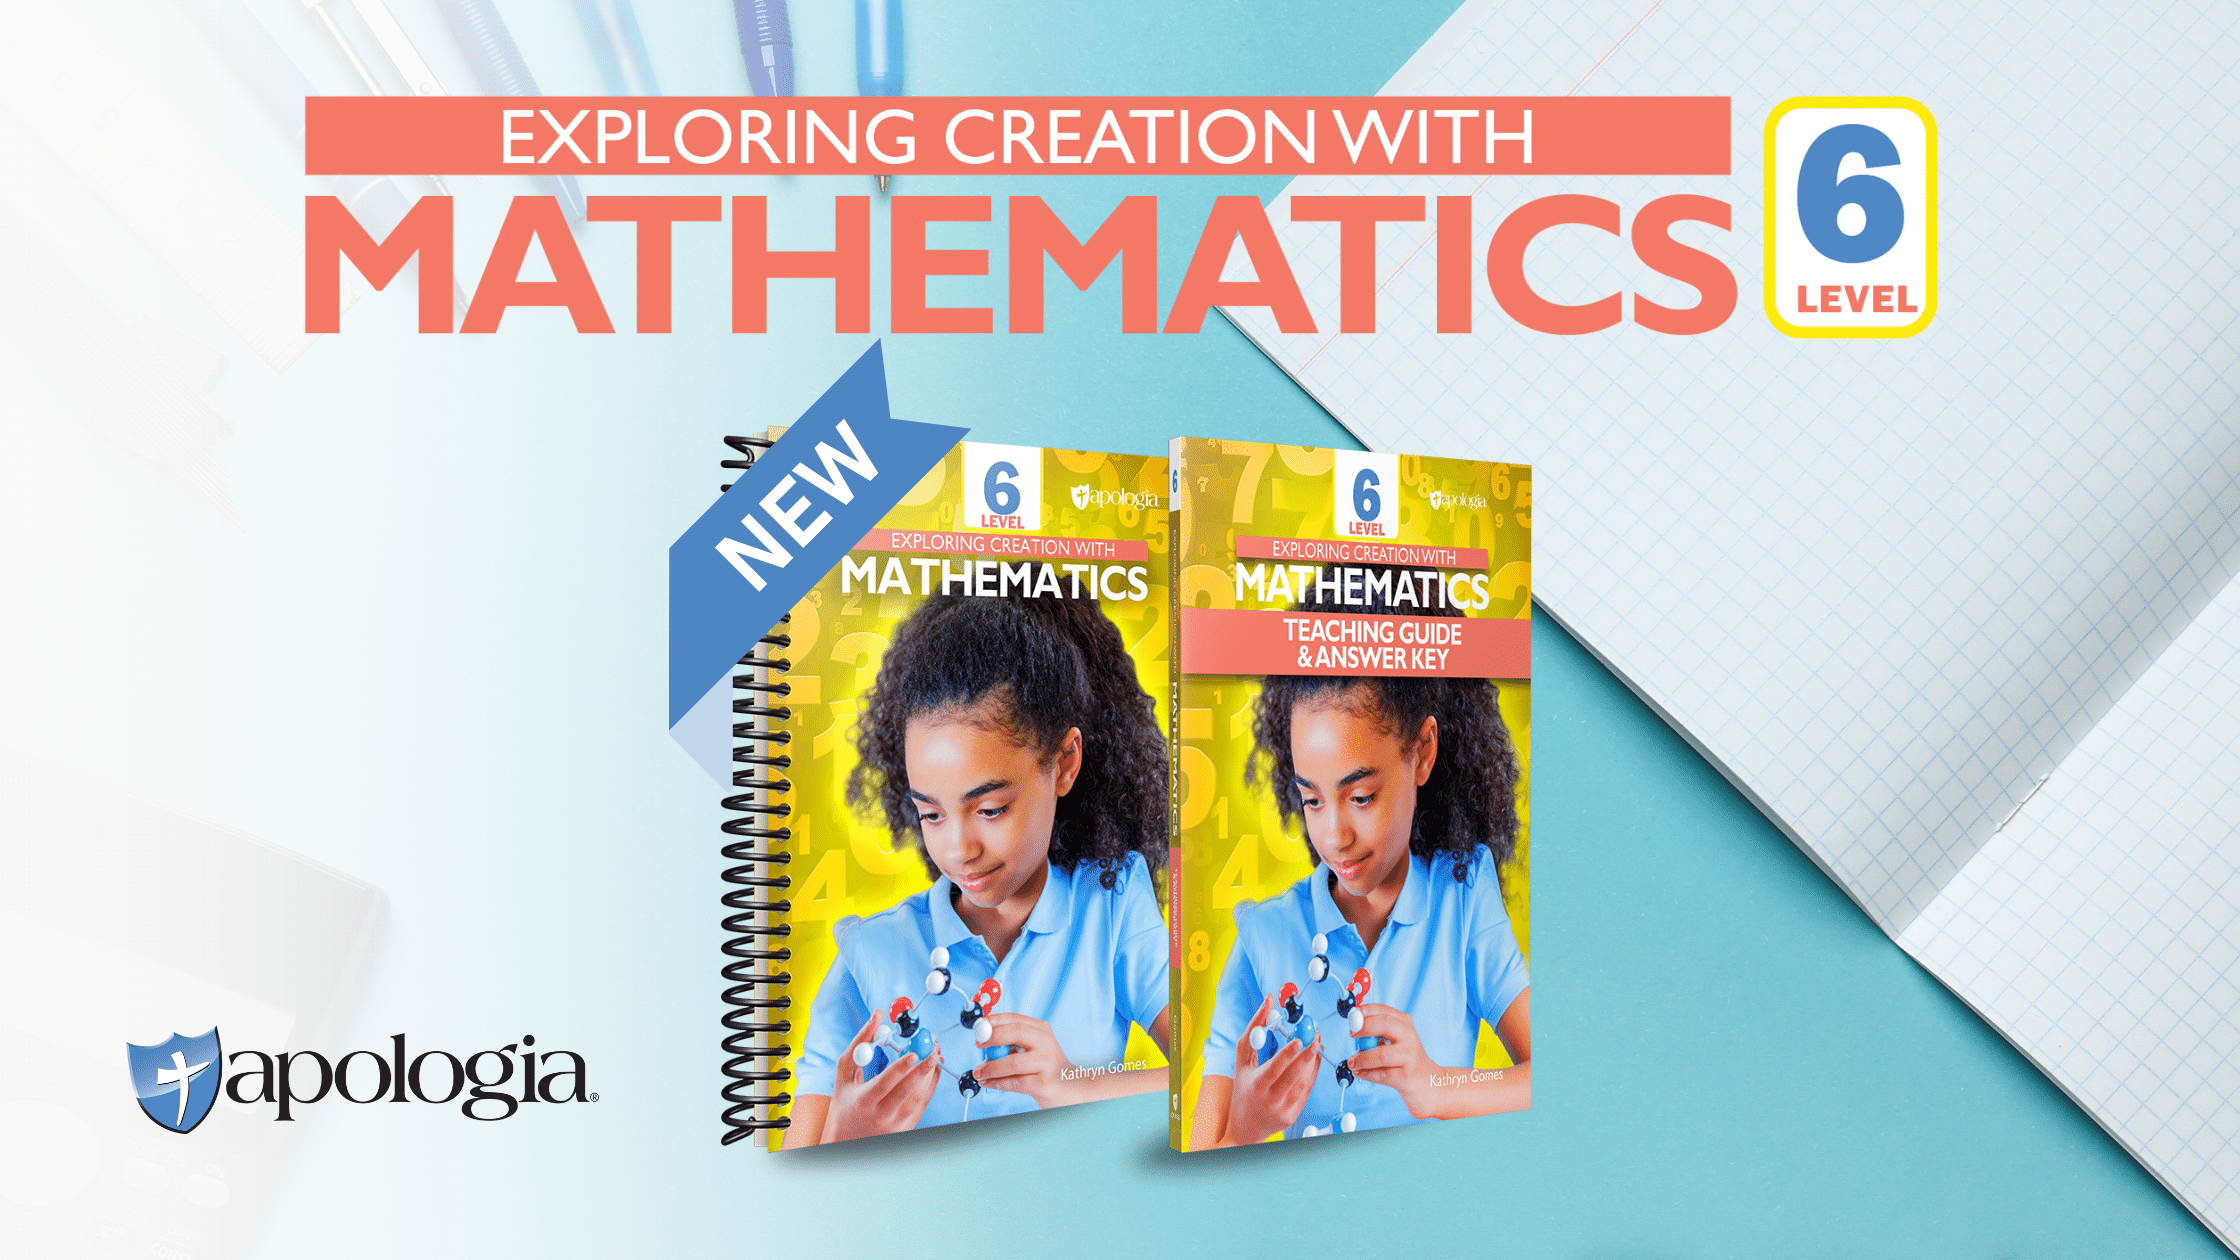 Introducing Exploring Creation with Mathematics, Level 6